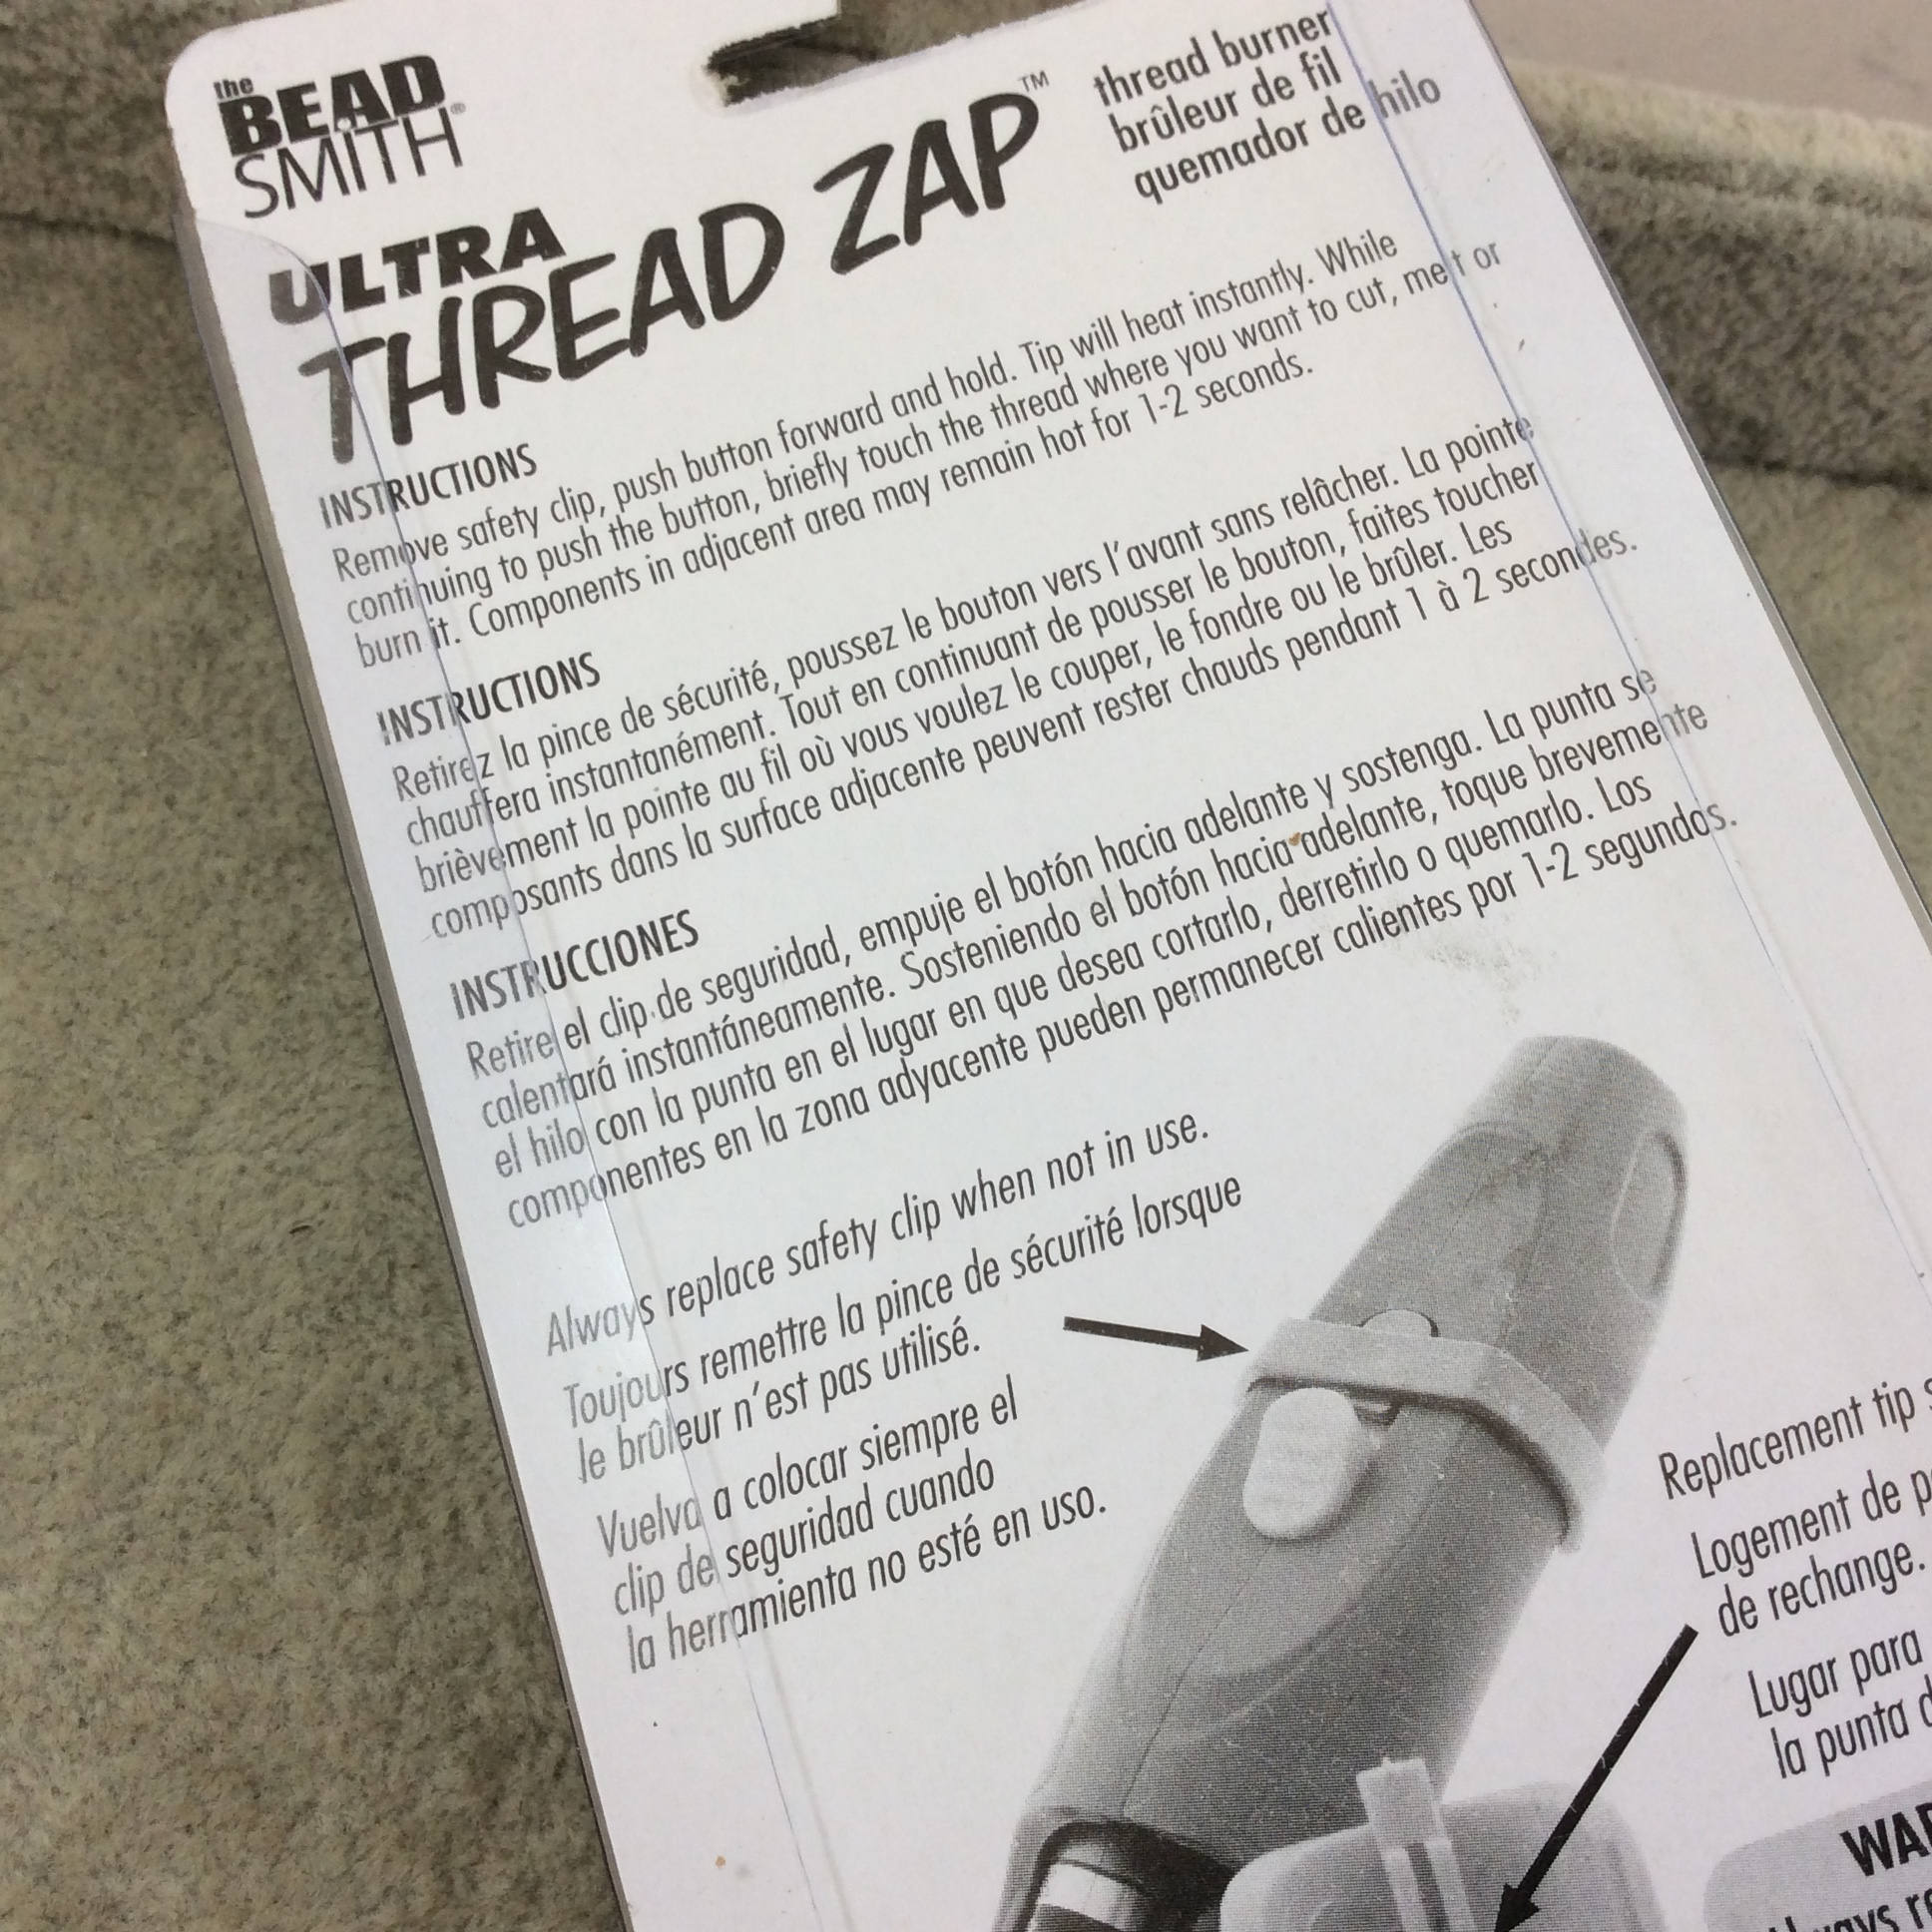 Thread burner tool : Thread Zap 2 Cord Zap